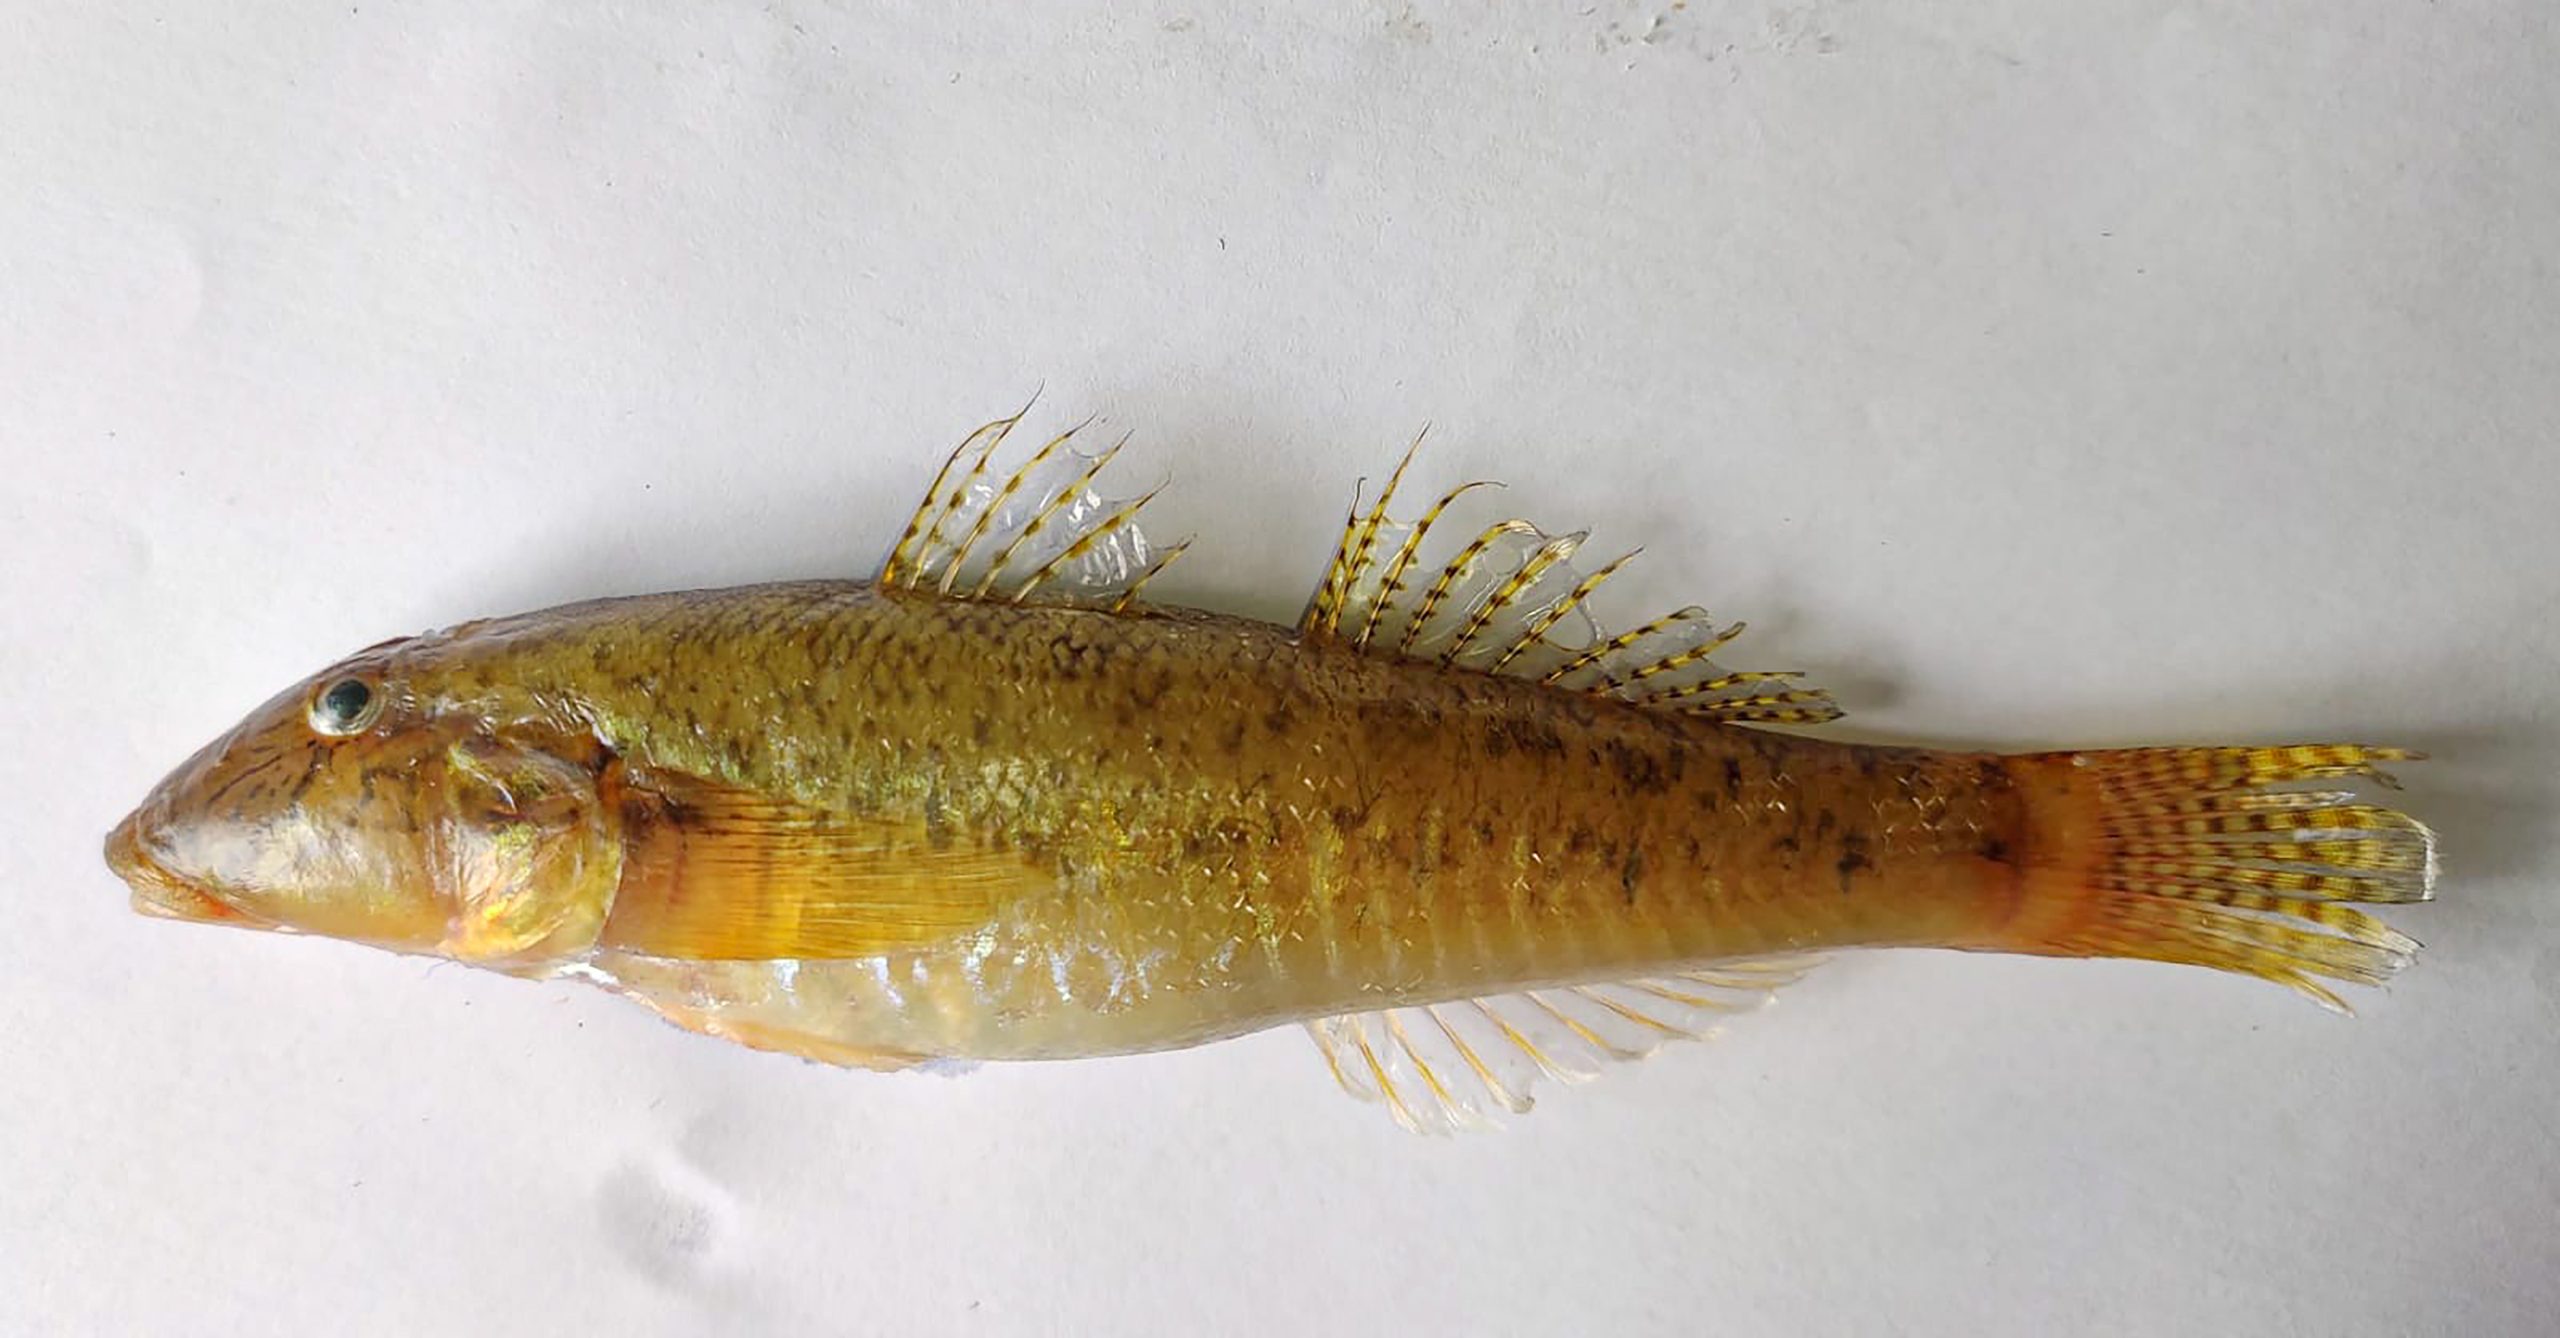 Researchers Discover New Freshwater Fish Species 'Awaous Motla' In Odisha's Mahanadi River